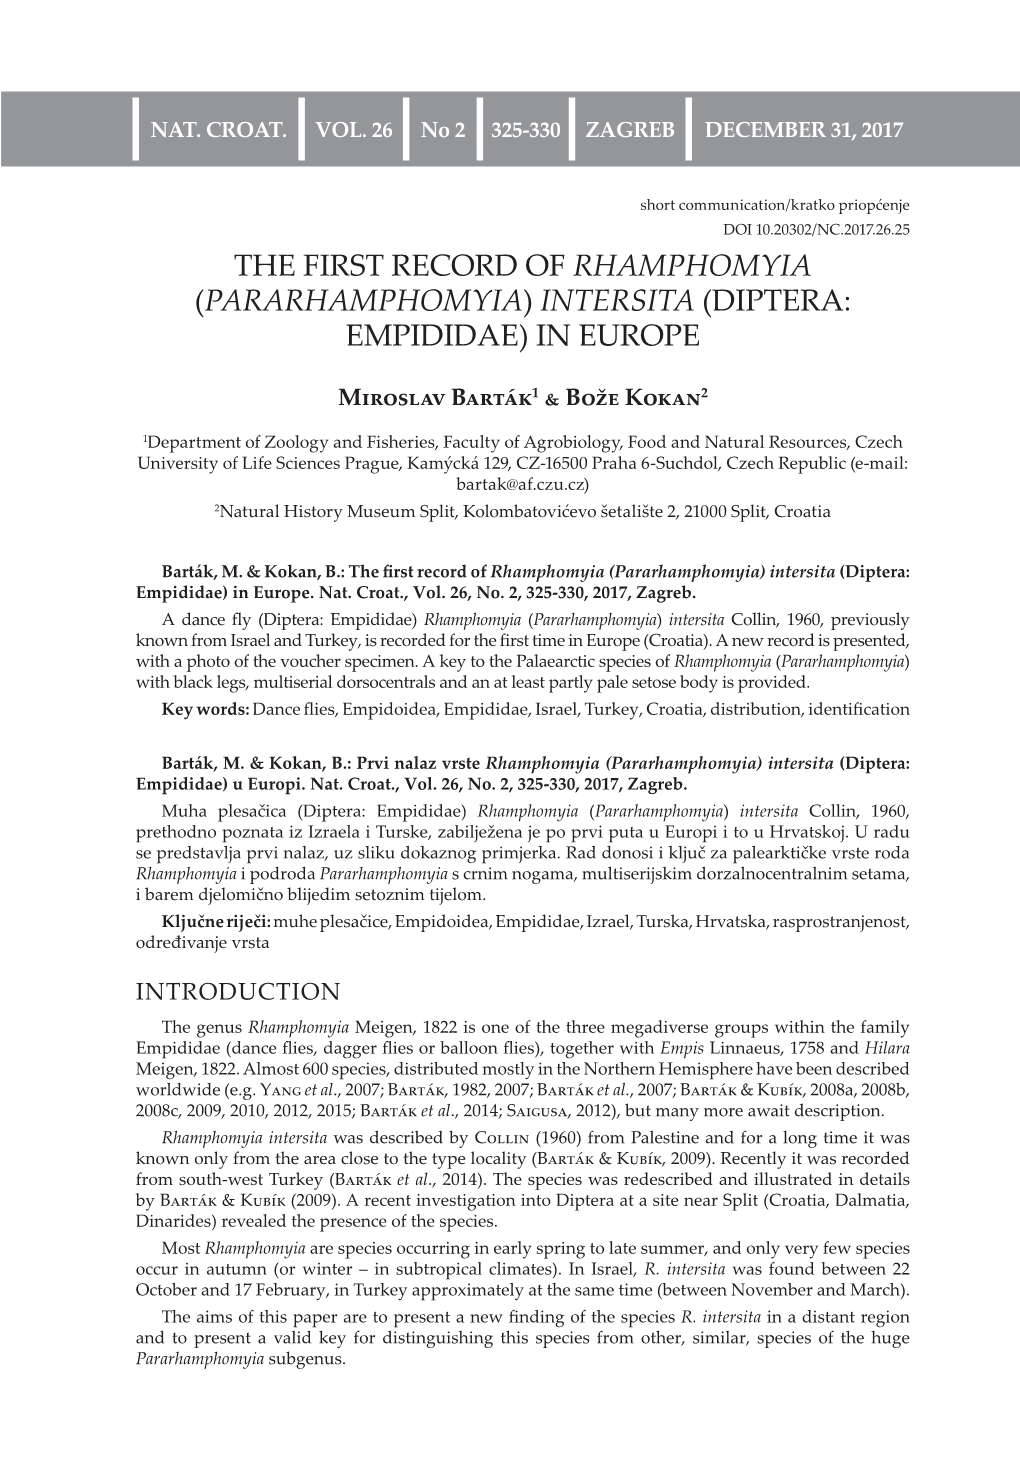 The First Record of Rhamphomyia (Pararhamphomyia) Intersita (Diptera: Empididae) in Europe